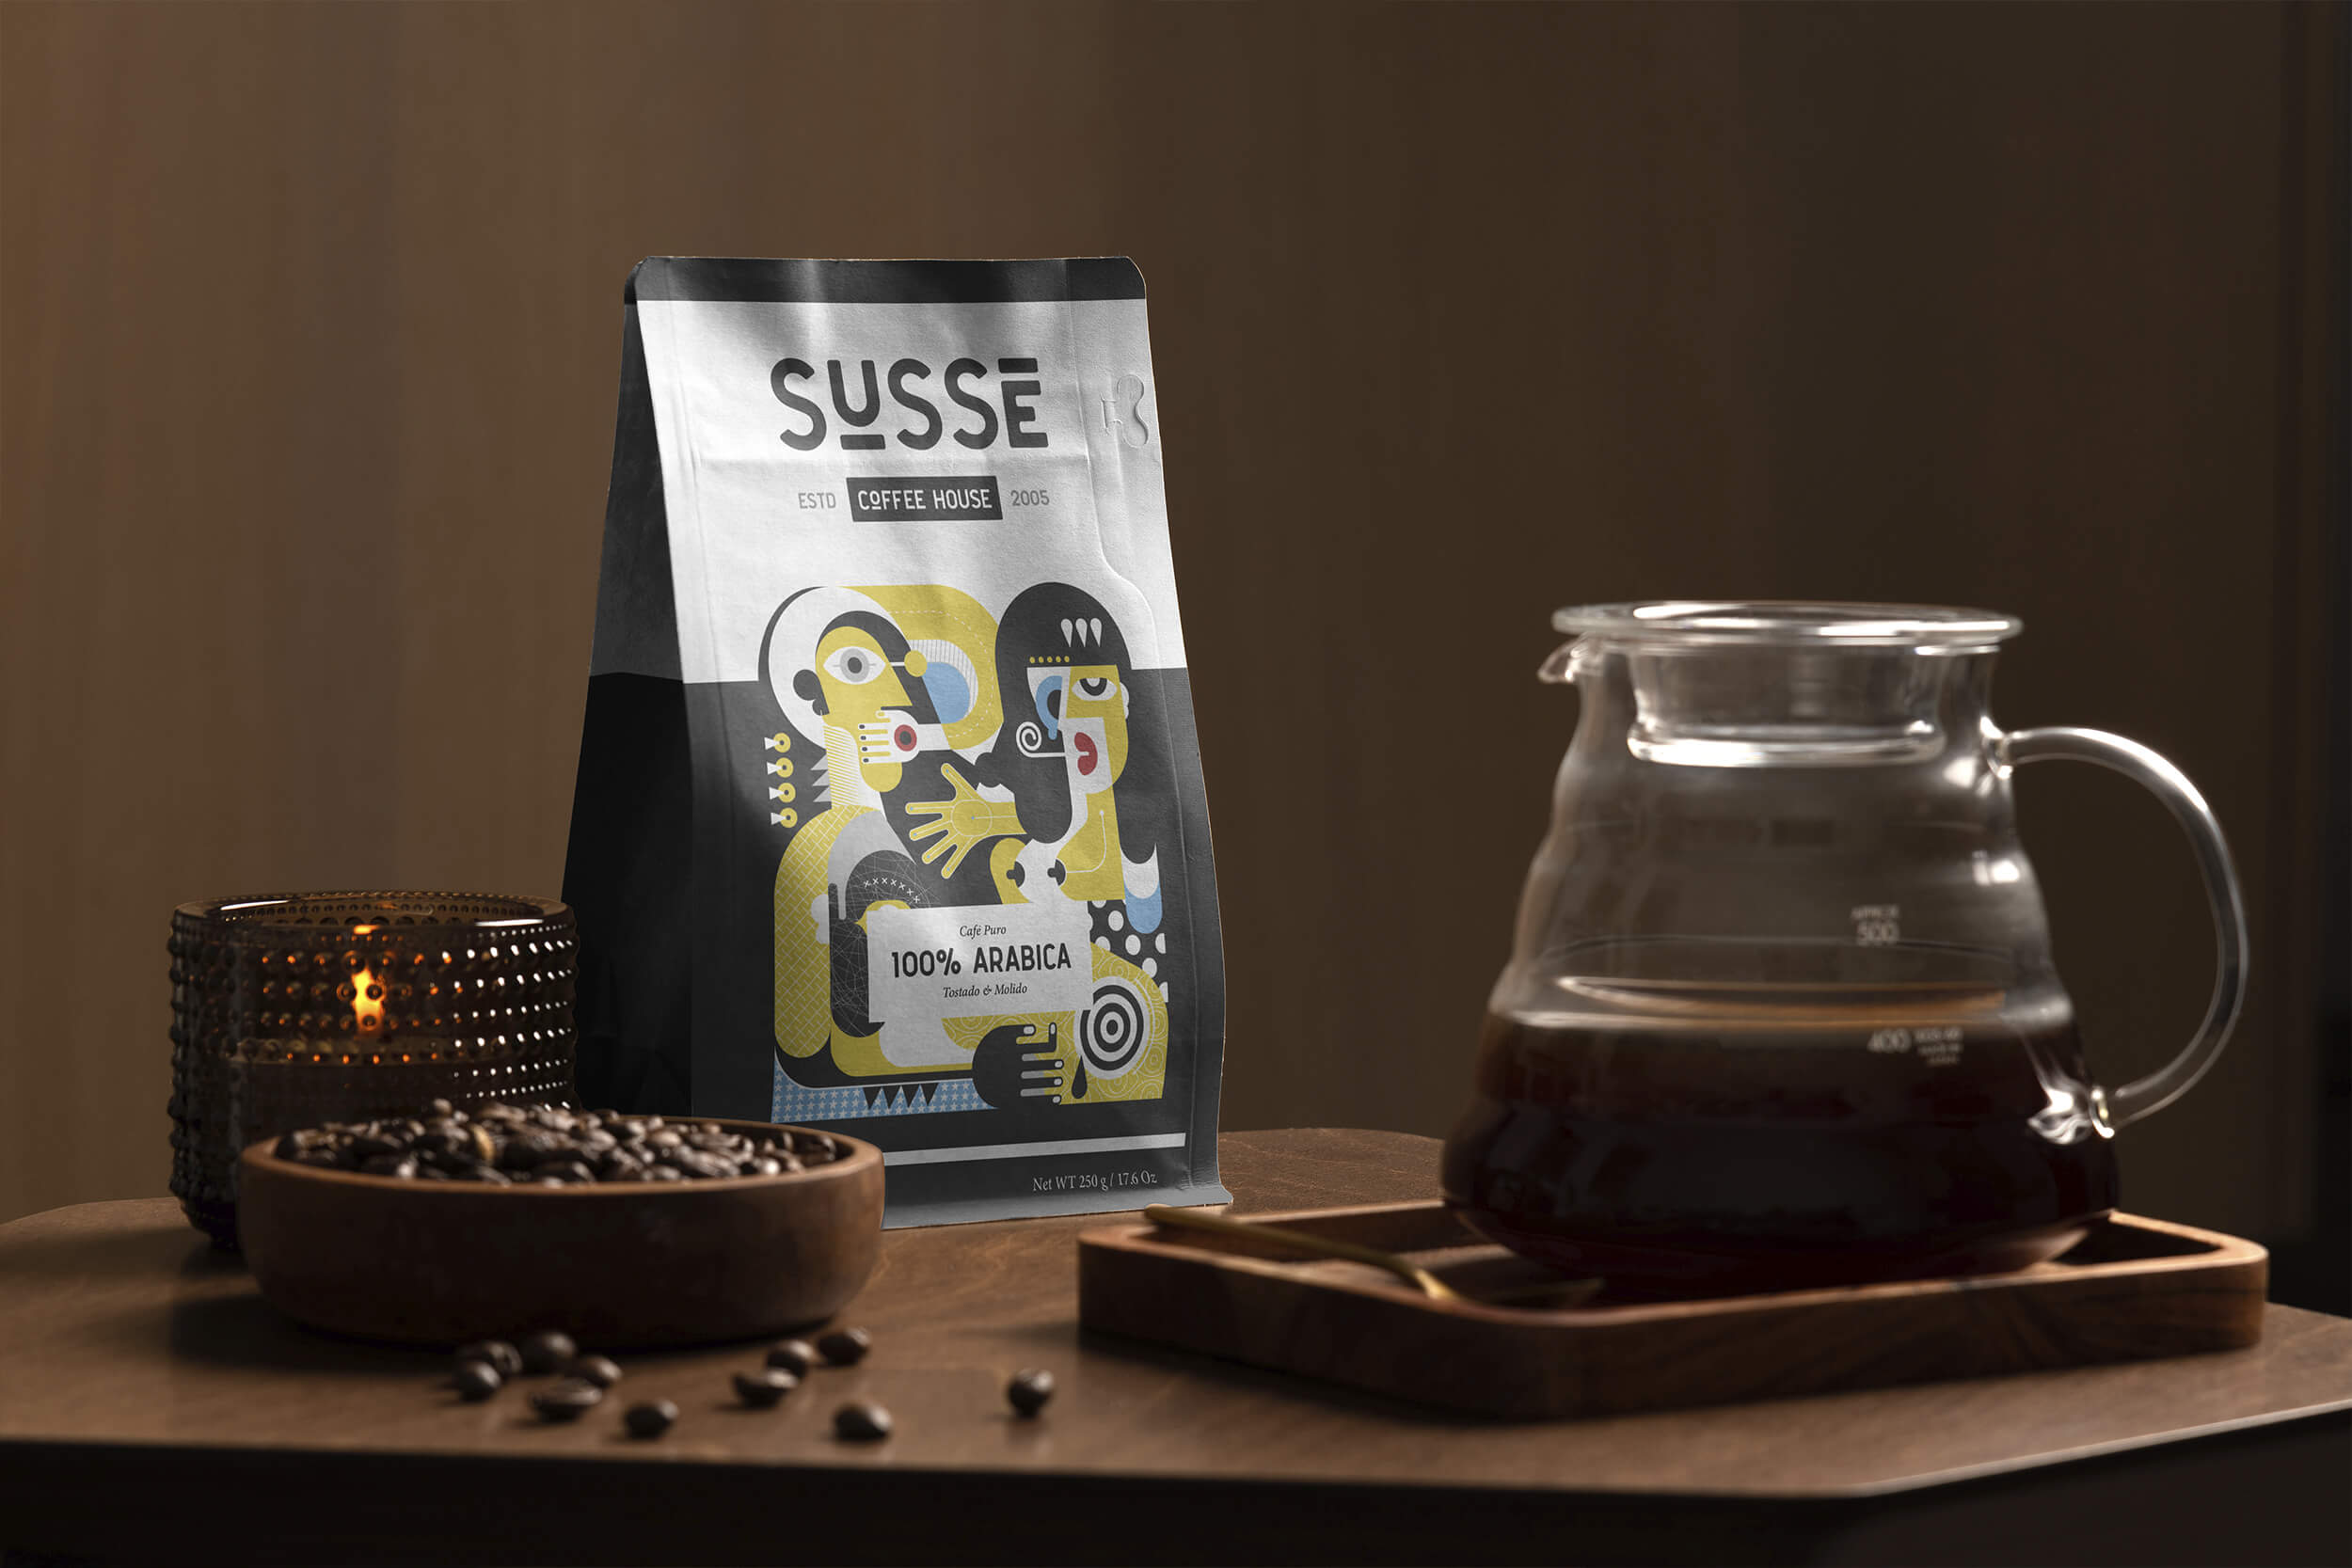 Sussé Coffee House